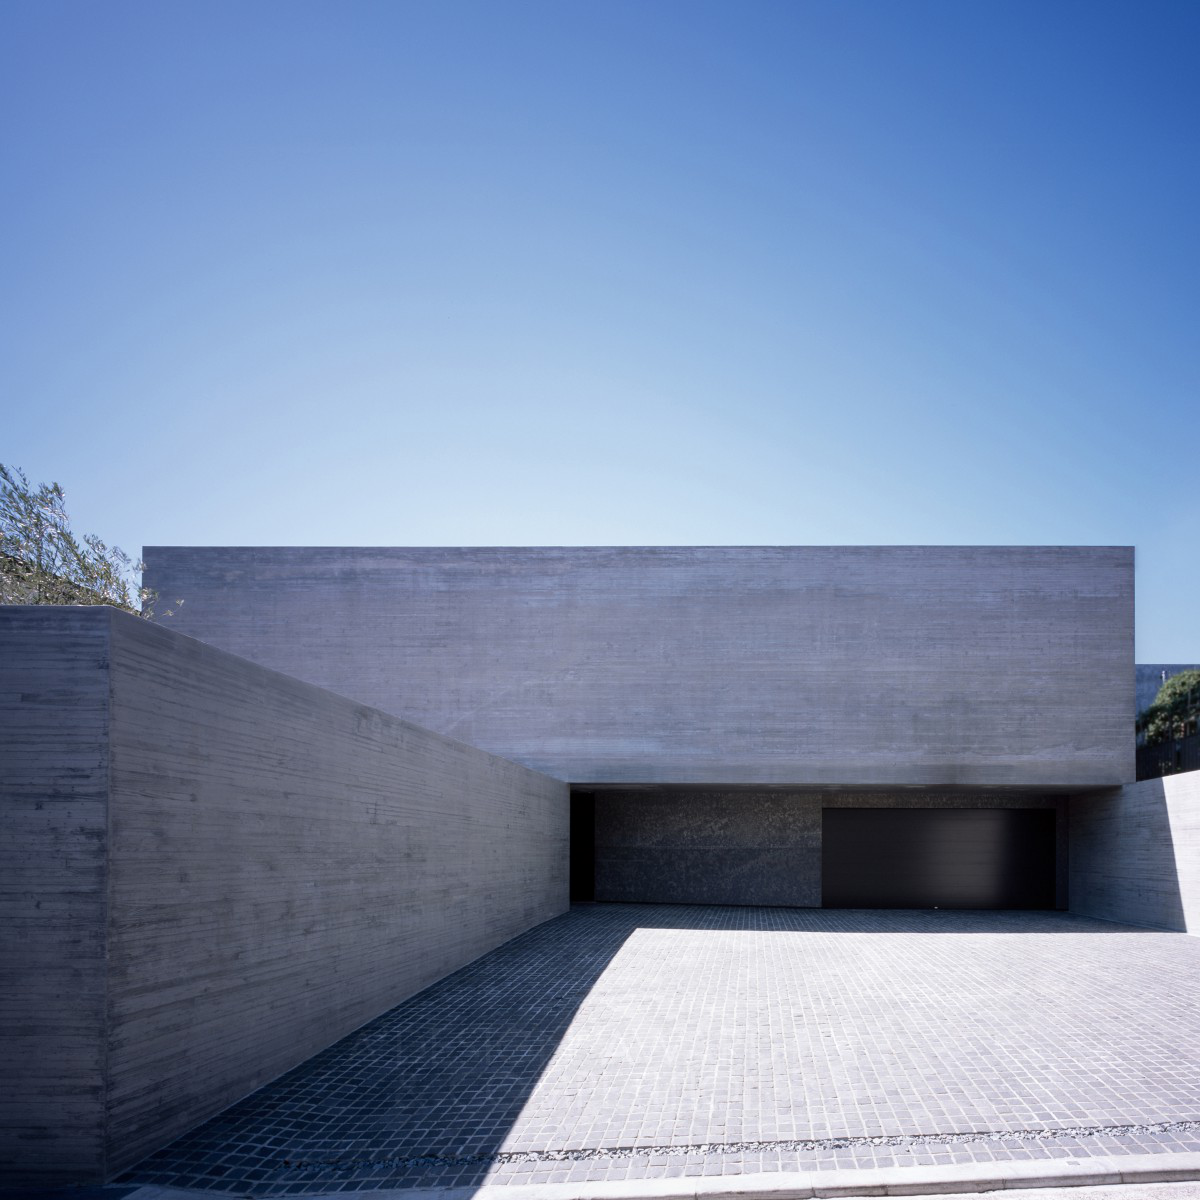 Satoshi Kurosaki wins Silver at the prestigious A' Architecture, Building and Structure Design Award with Ortho Residenti.